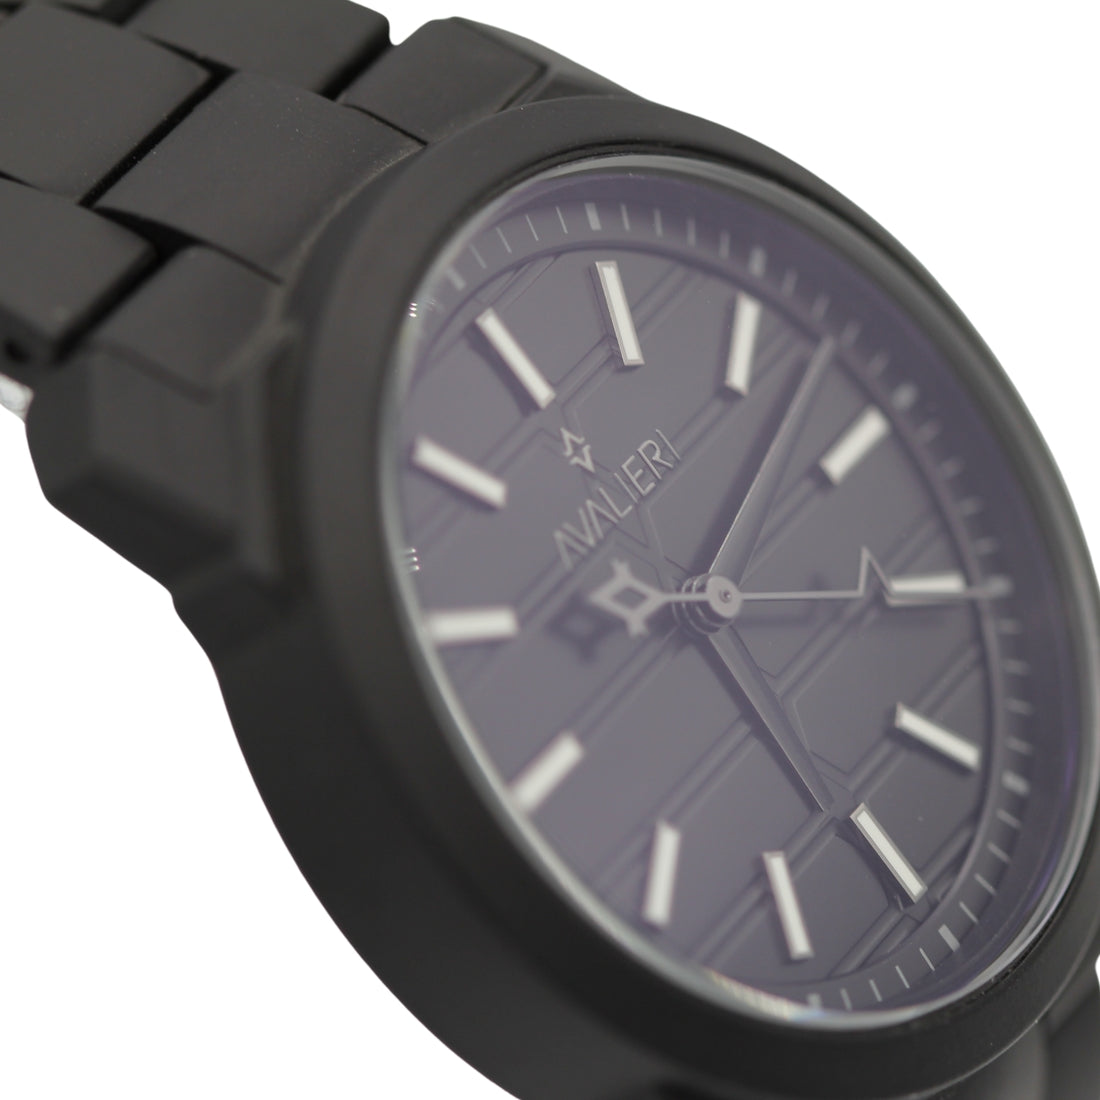 New Avalieri Collection Men's Quartz Black Dial Watch - AV-2577B